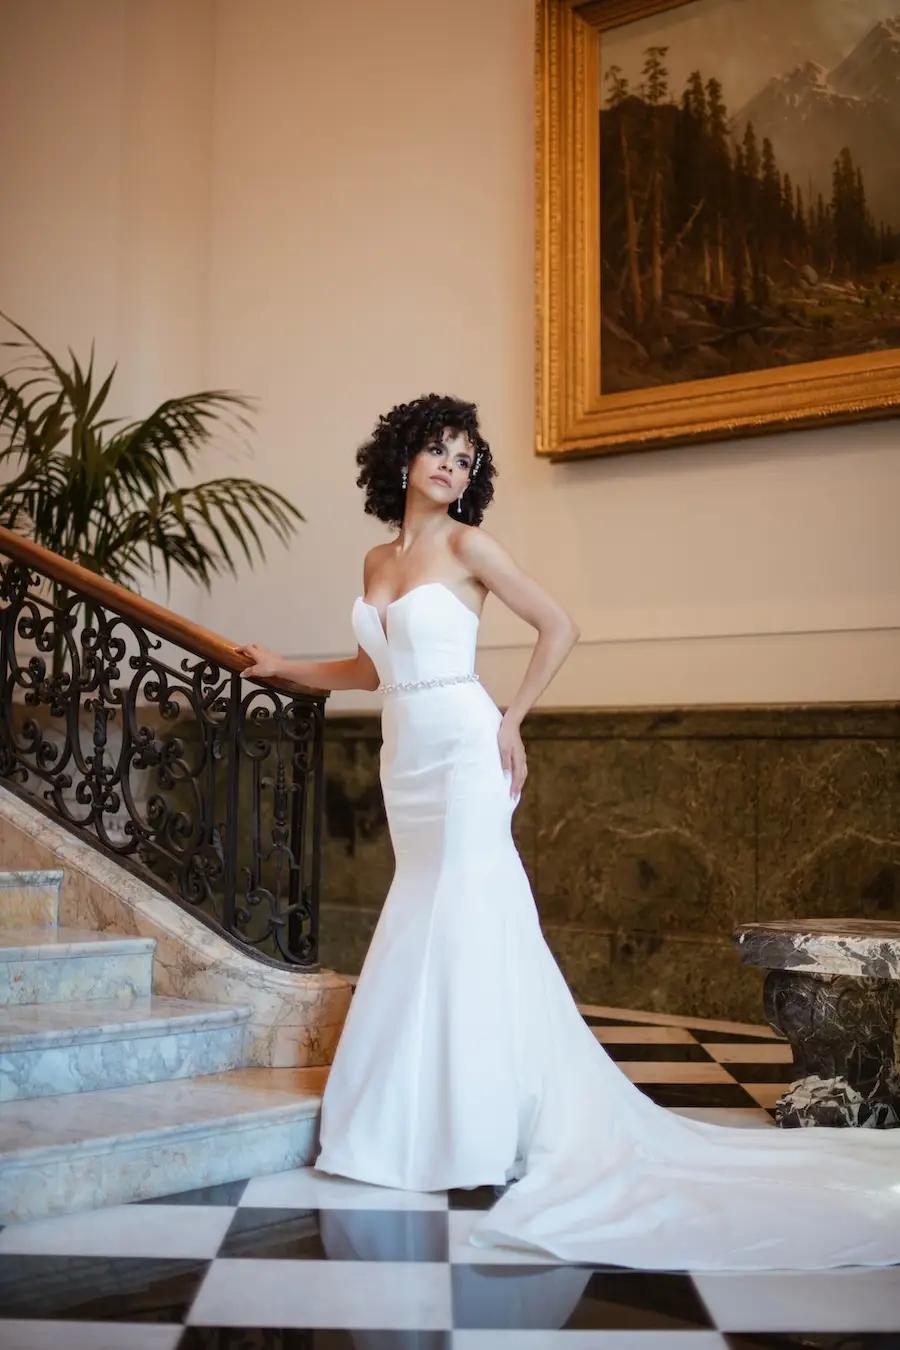 Jasmine Wears Modern, Strapless Wedding Dress. Desktop Image